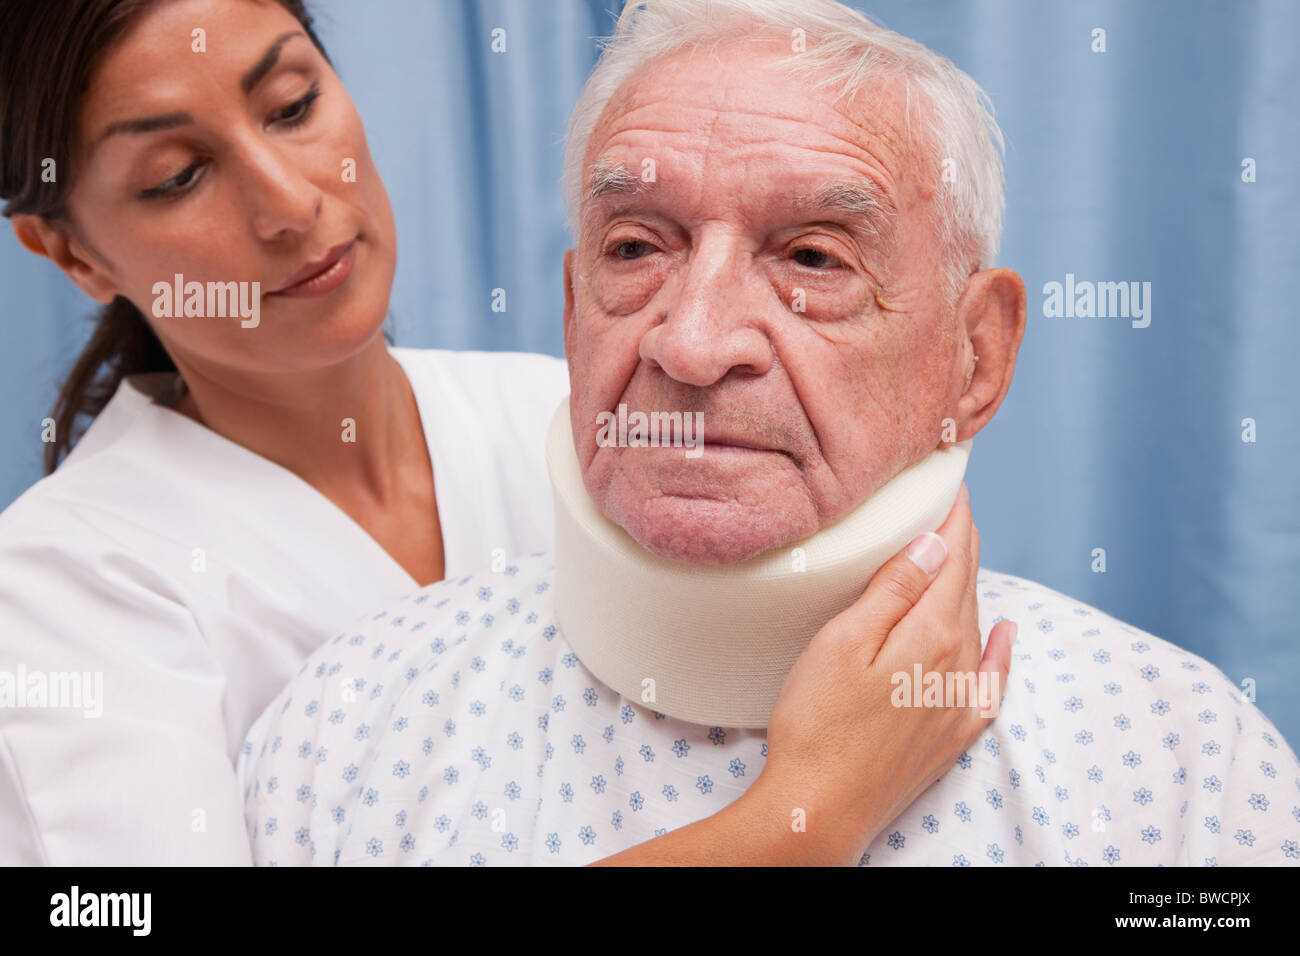 USA, Illinois, Metamora, Female doctor fastening neck brace on senior man's neck Stock Photo